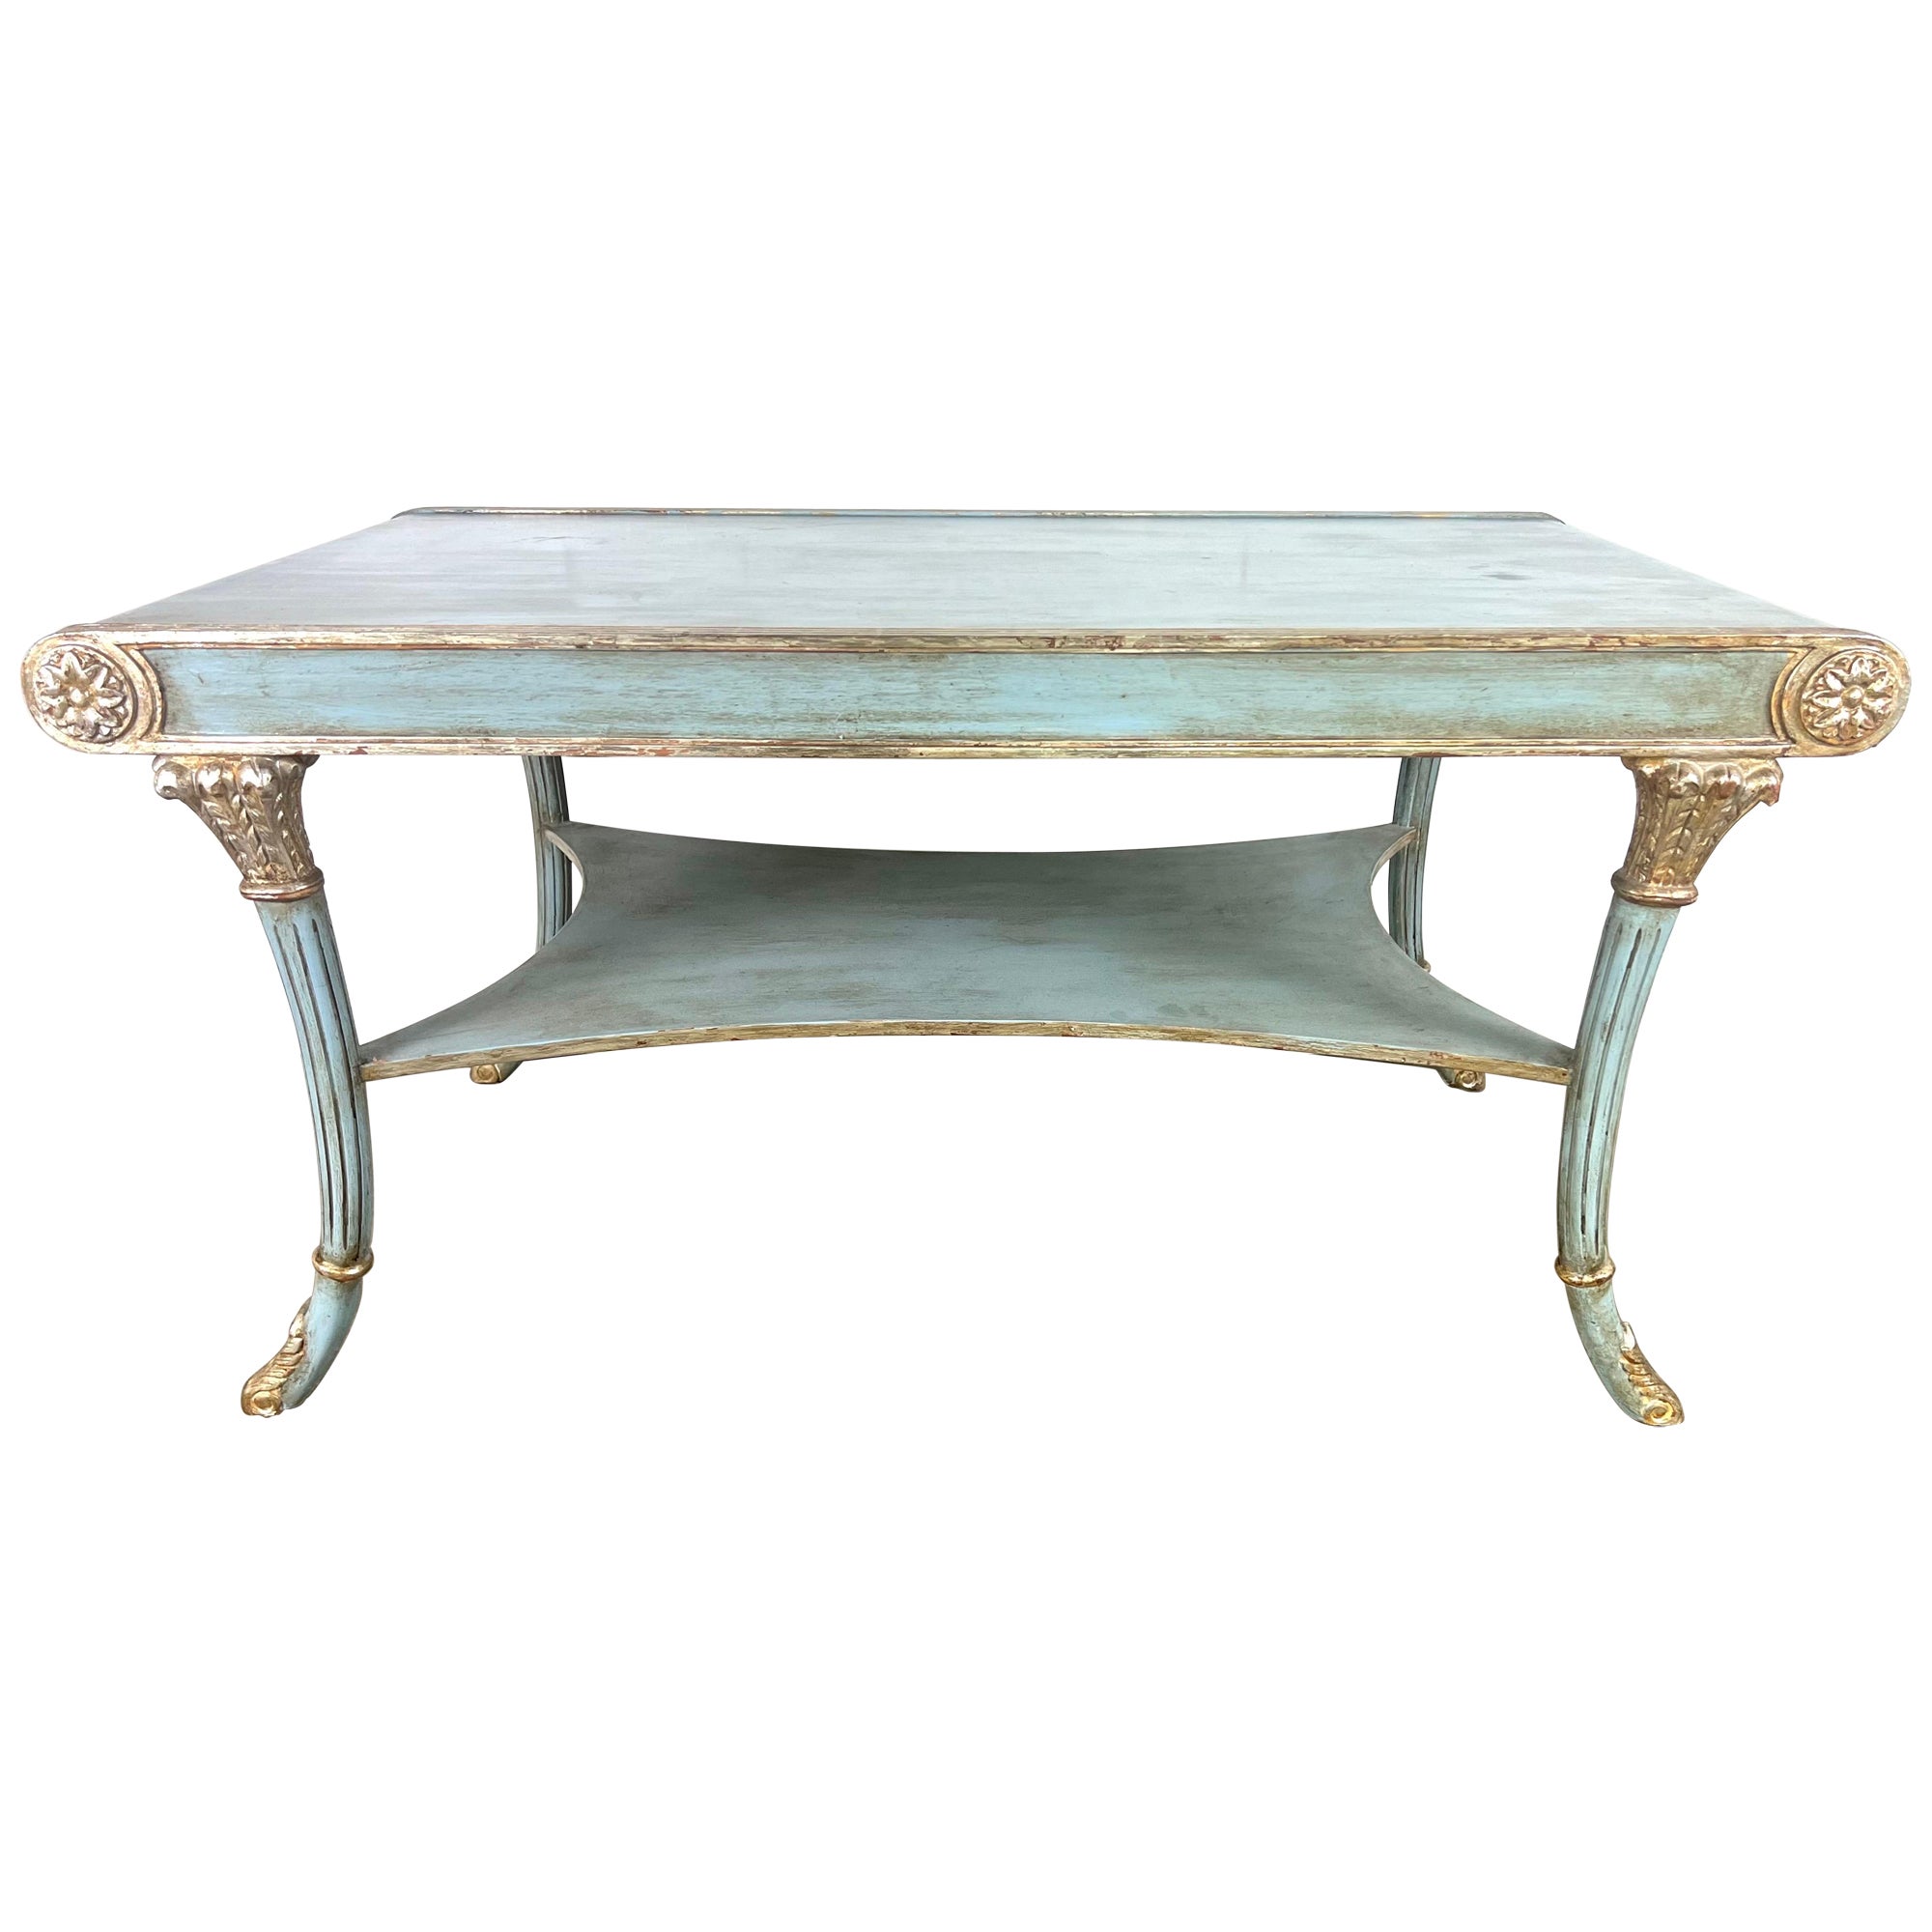 Italian Regency Style Painted & Parcel Gilt Table by Nancy Corzine For Sale